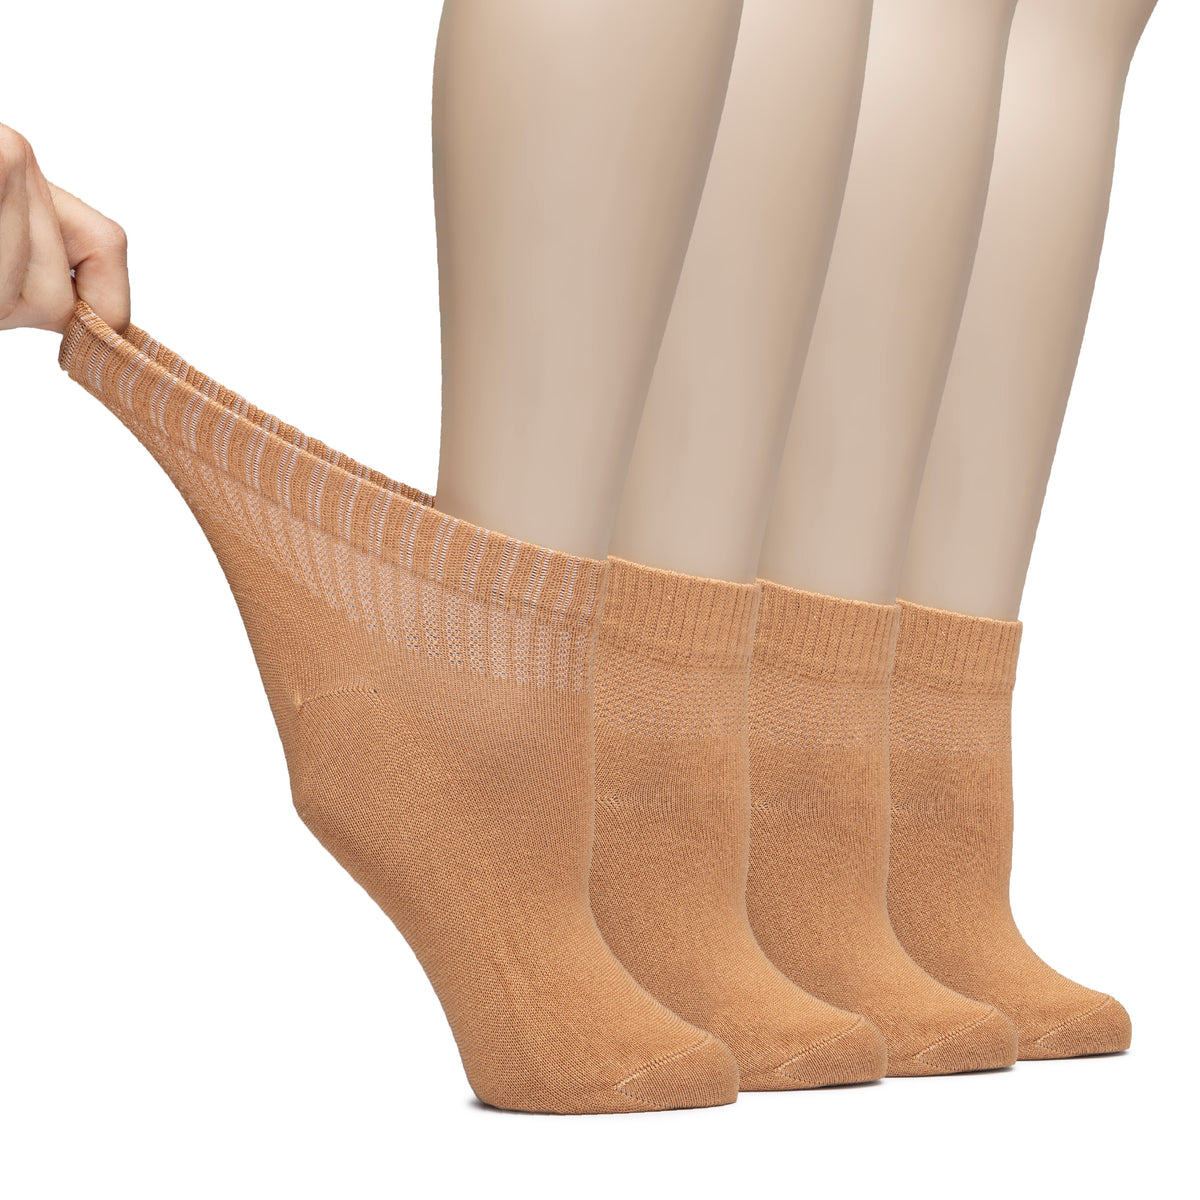 Hugh Ugoli Lightweight Women's Diabetic Ankle Socks Bamboo Thin Socks Seamless Toe and Non-Binding Top, 4 Pairs, , Shoe Size: 6-9/10-12 | Shoe Size: 6-9 | Light Beige